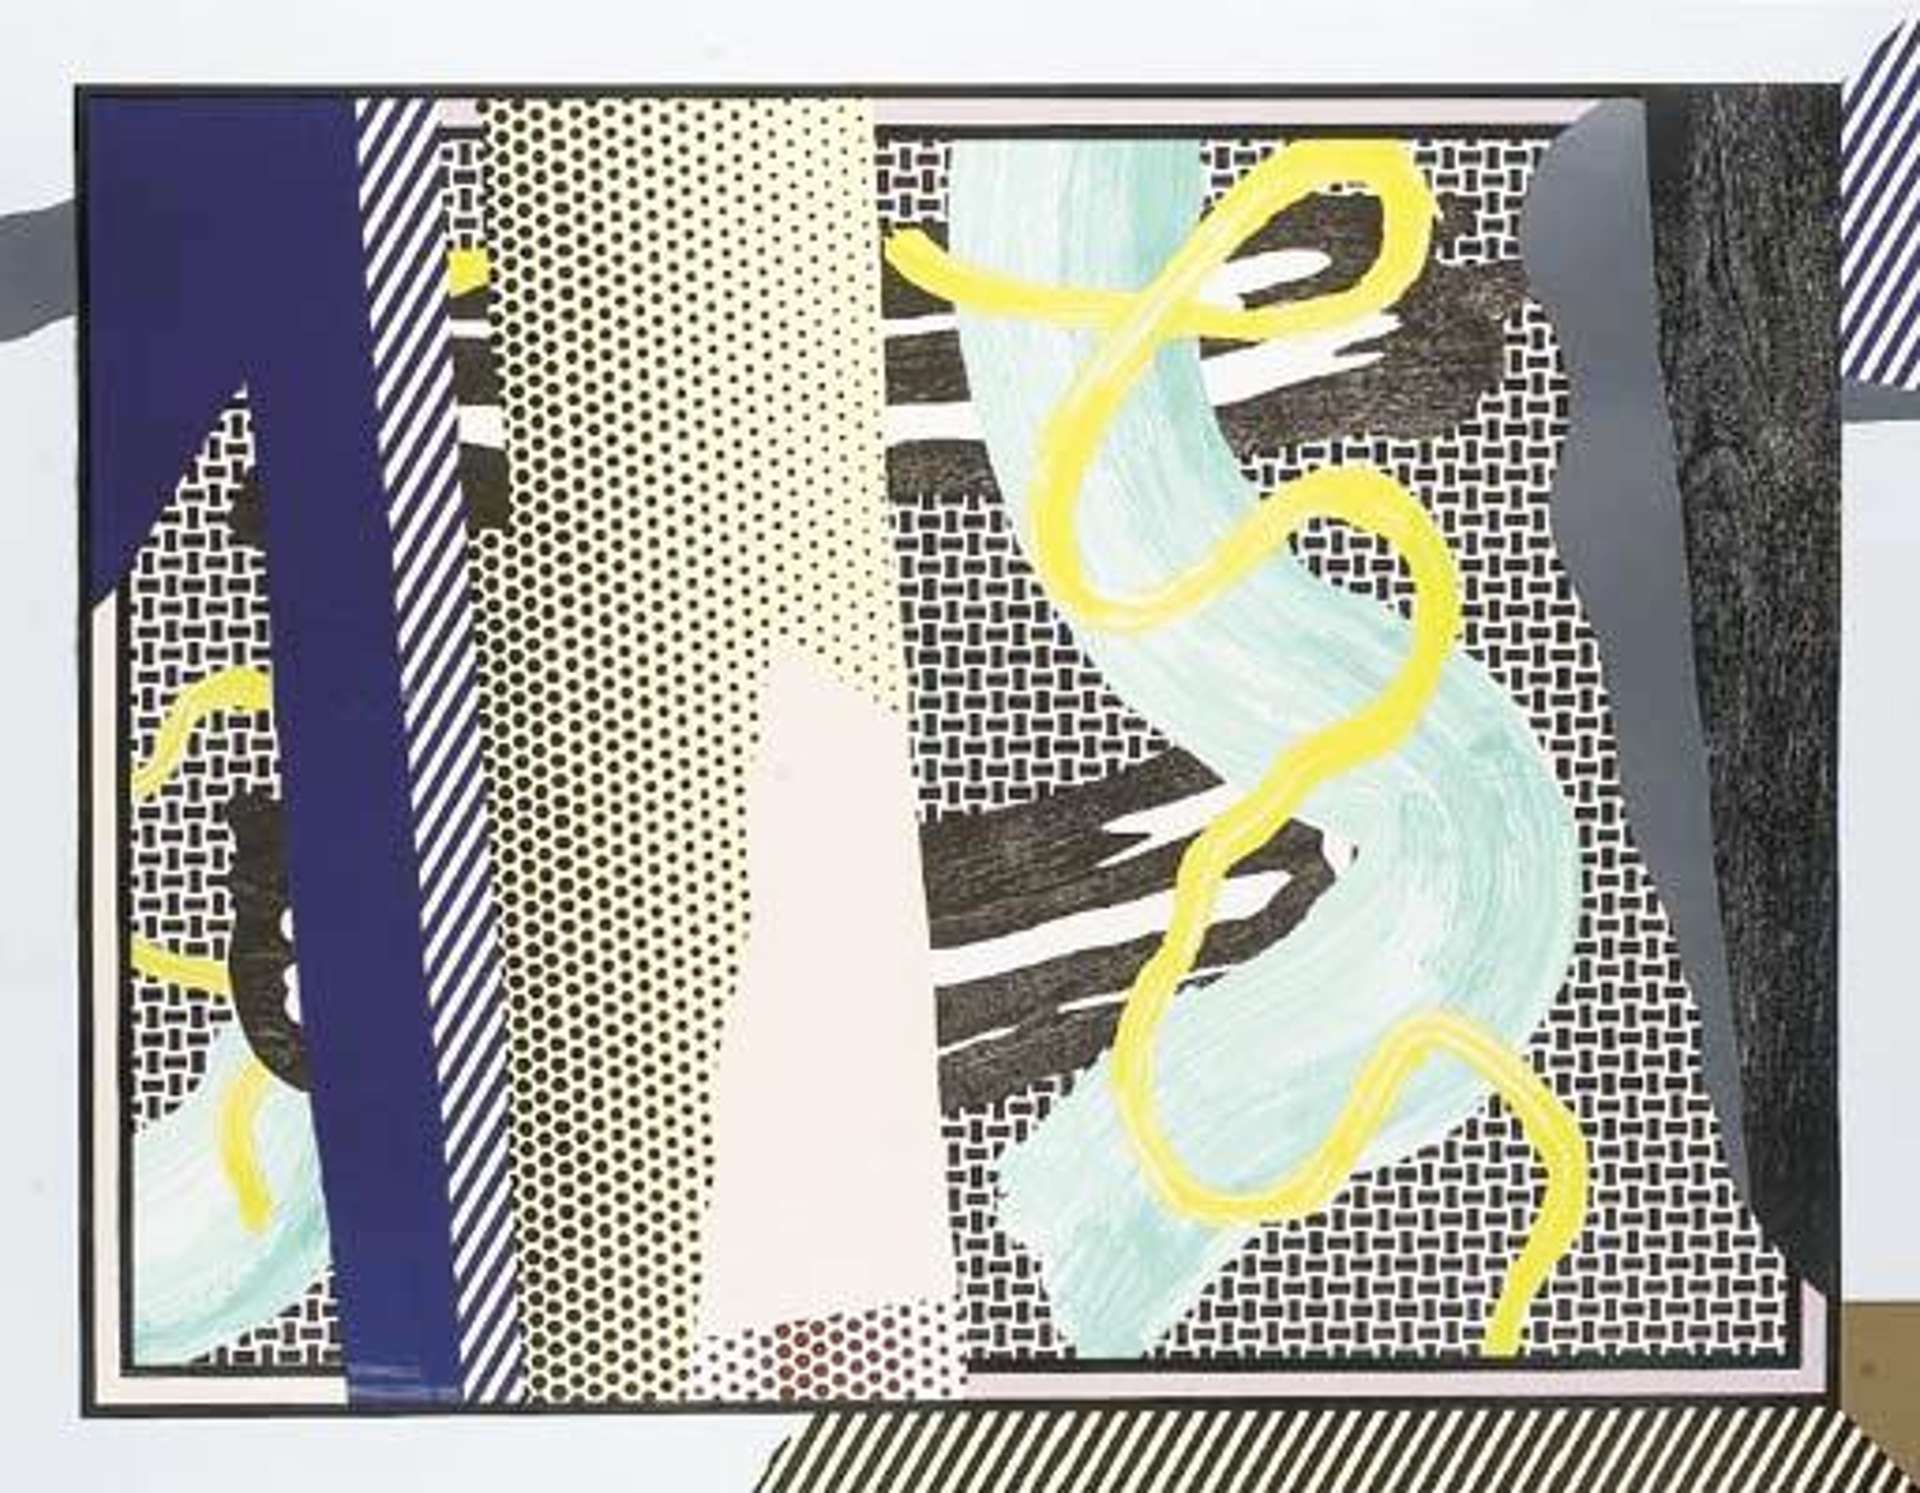 A Pop Art rendition of a brushstroke by Roy Lichtenstein, executed in screenprint.